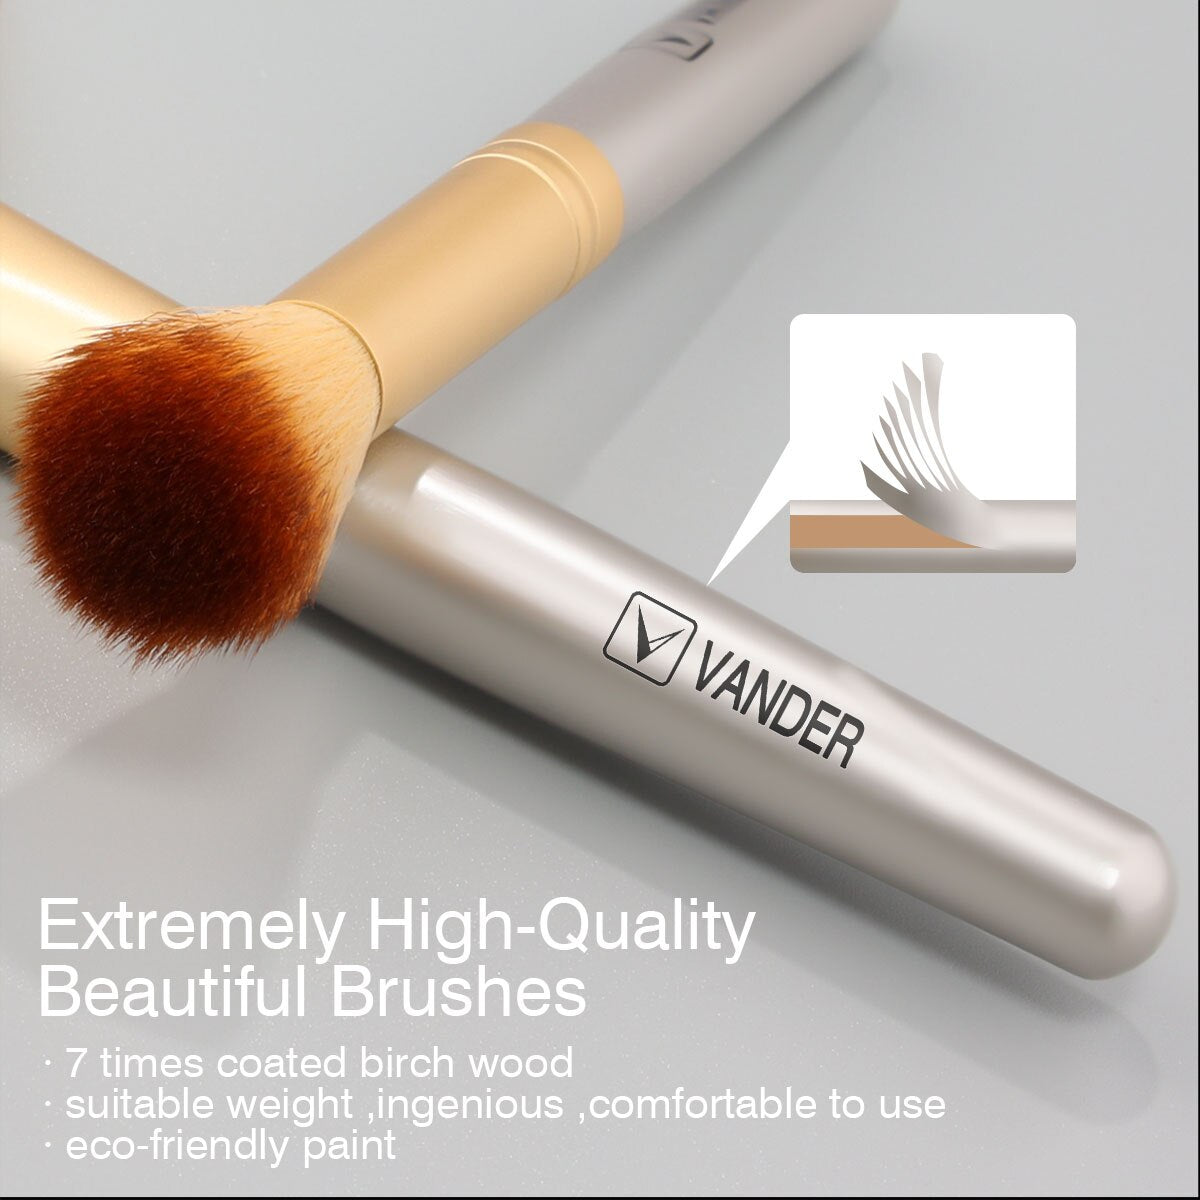 Professional Makeup Brushes Set | Powder Foundation Contour Blush Concealer Eyeshadow Blending Liner | Make Up Brush Kit As Gift